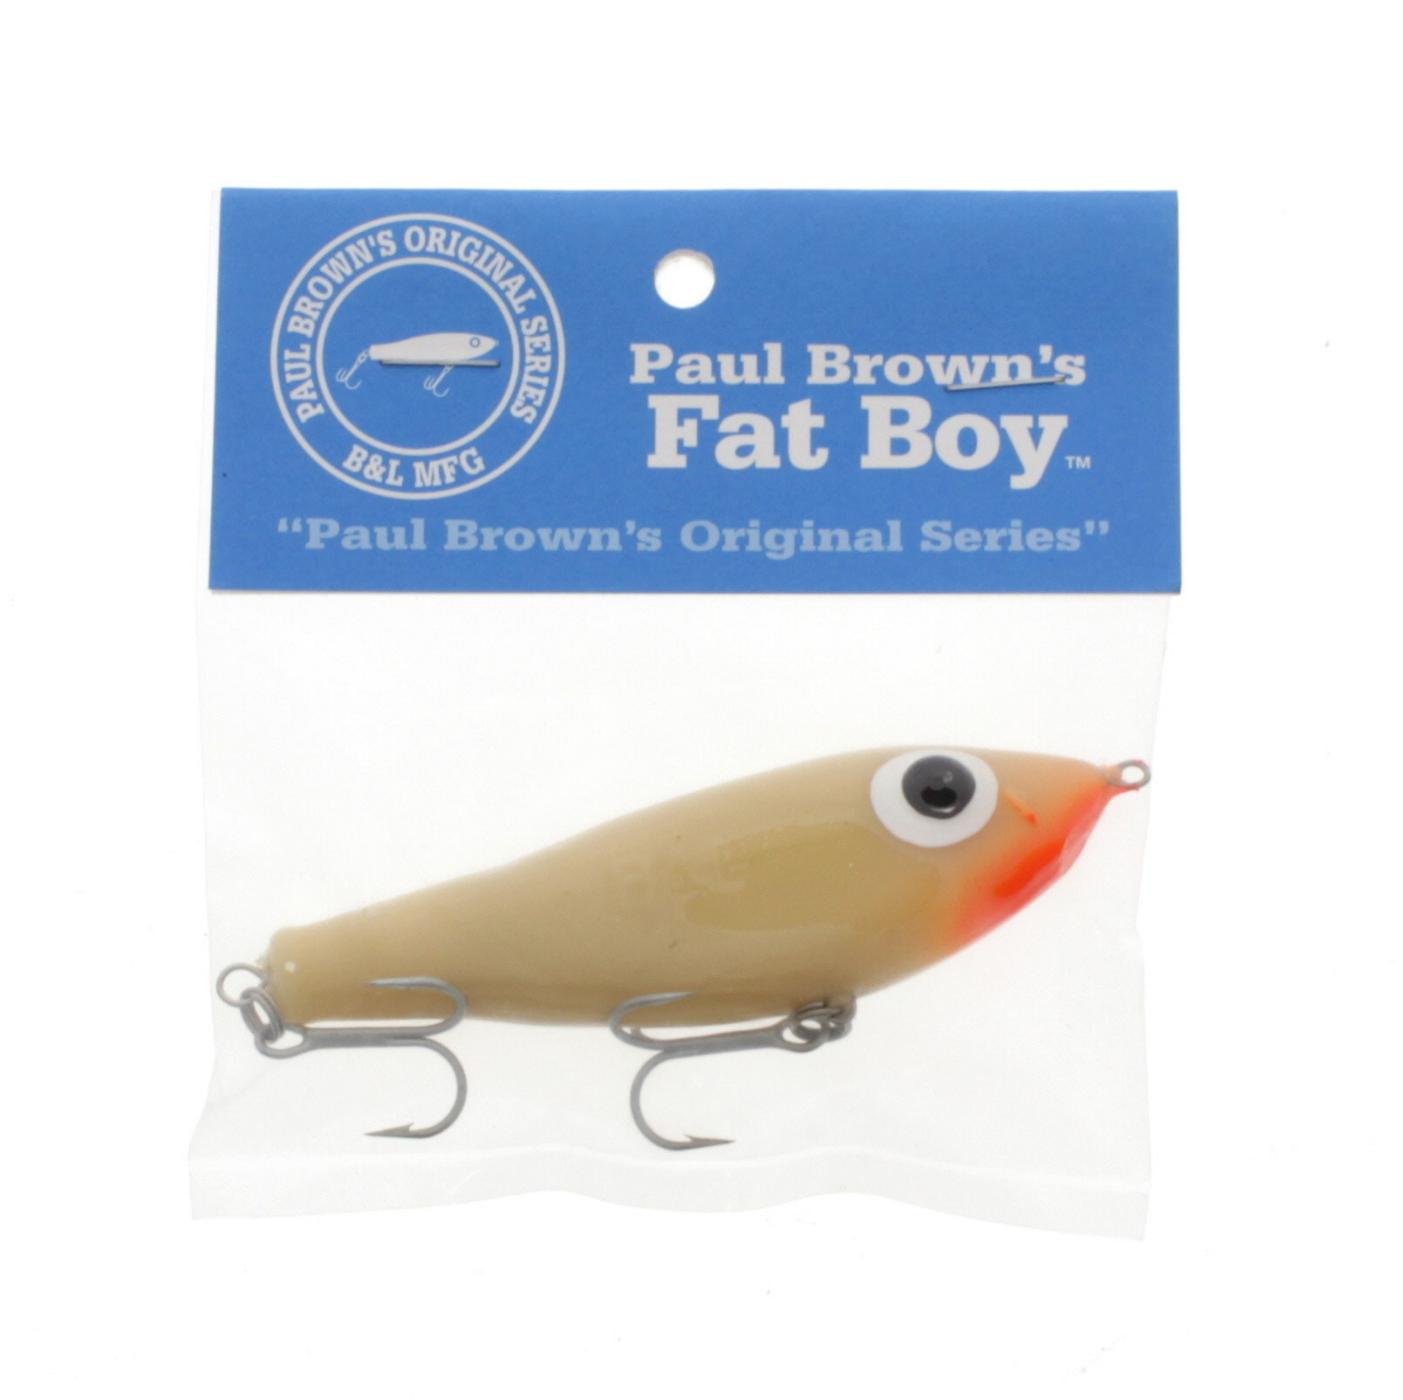 L&S Bait Company Bone Corky Fat Boy Lure - Shop Fishing at H-E-B